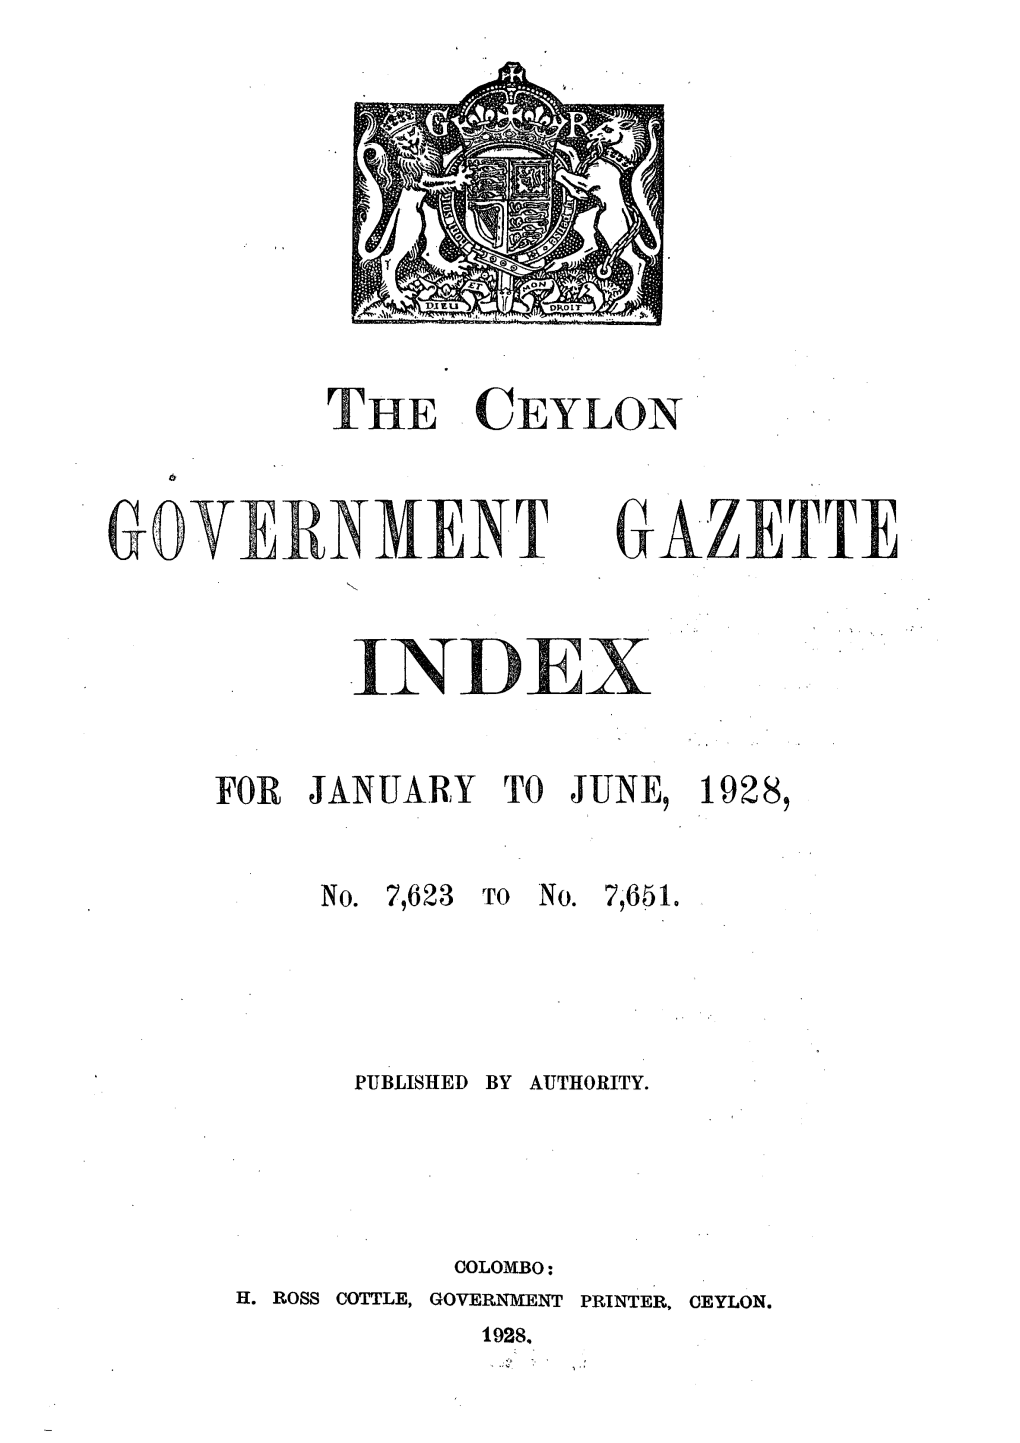 Government Gazette Index